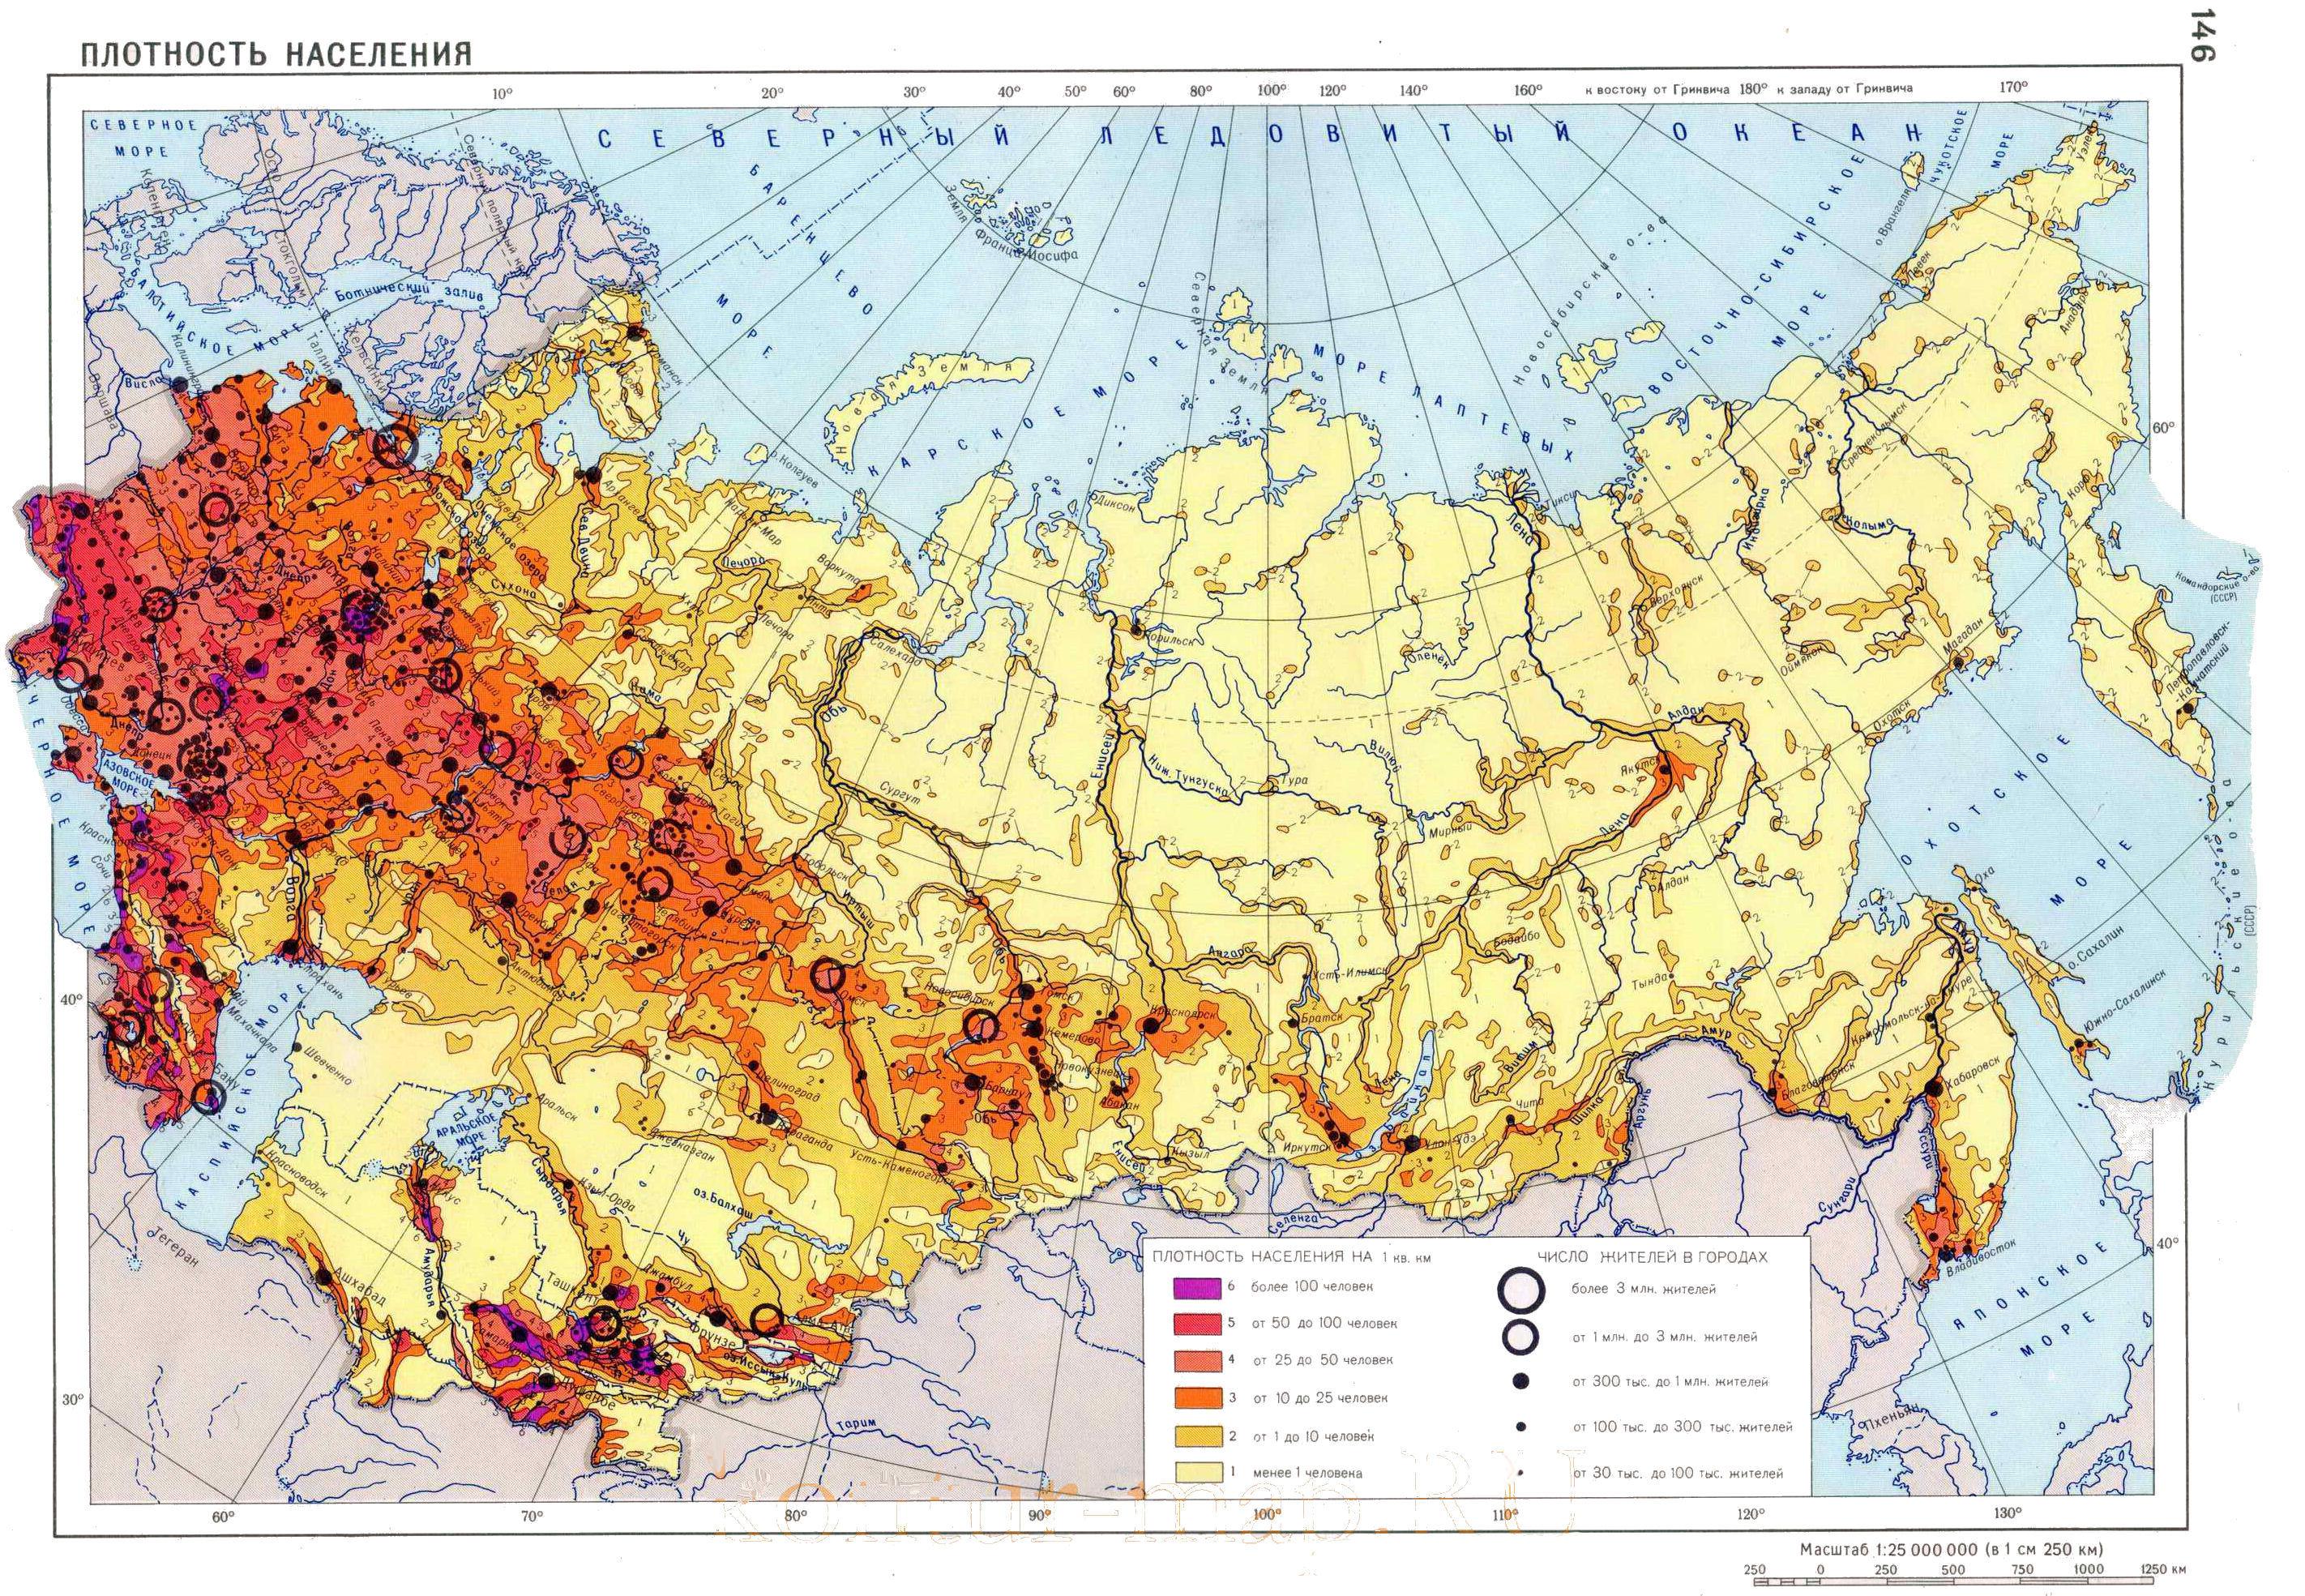 russia-population-density-map.jpg